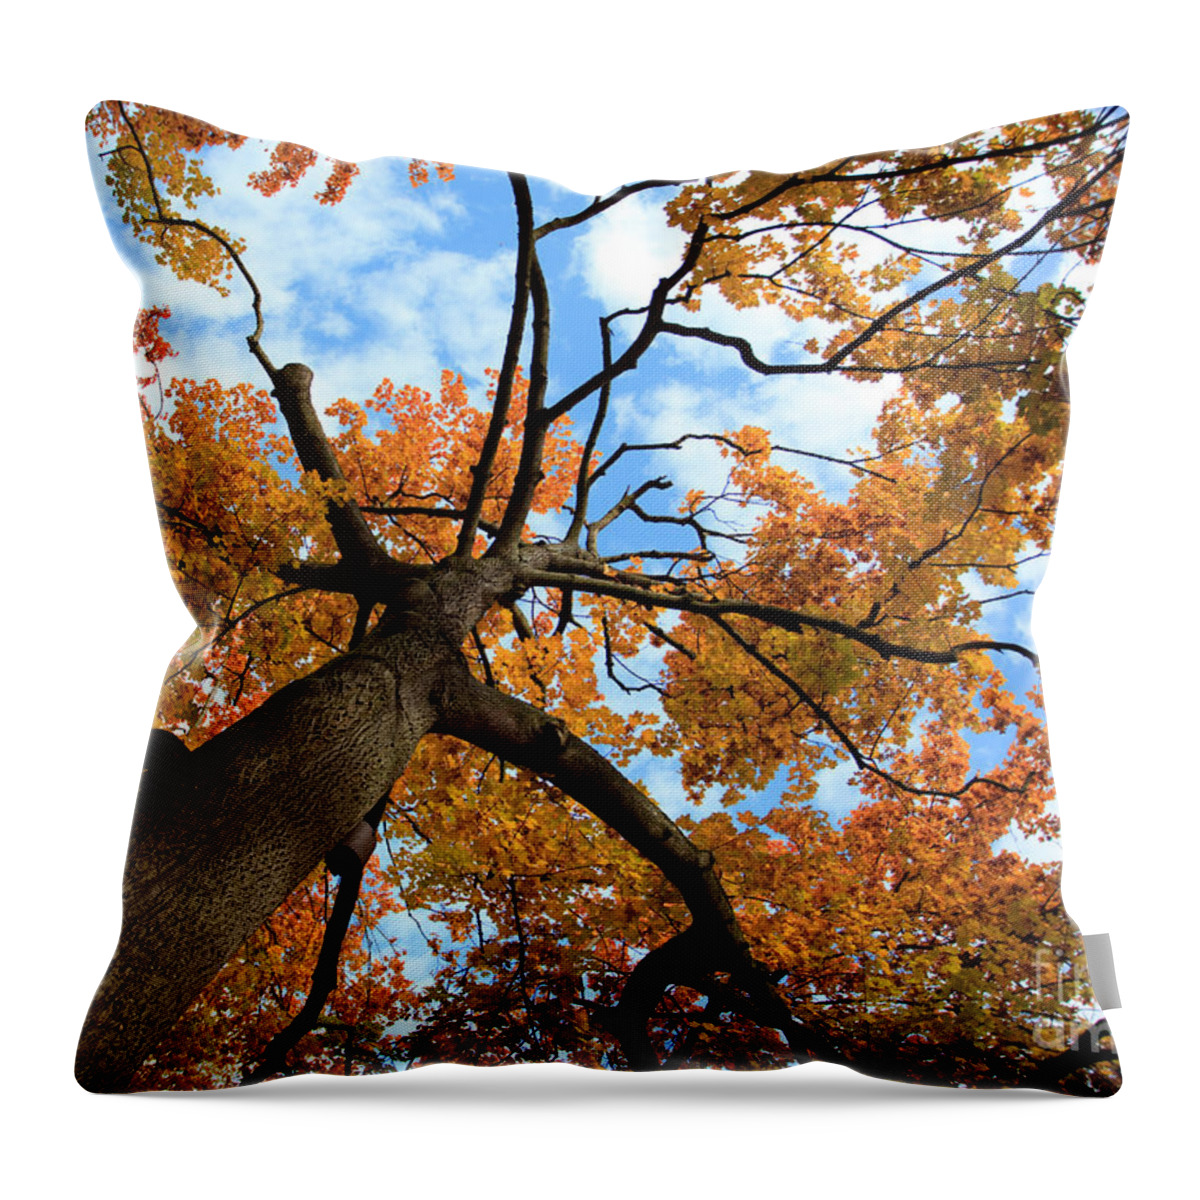 Tree Throw Pillow featuring the photograph Autumn Tree by Nailia Schwarz